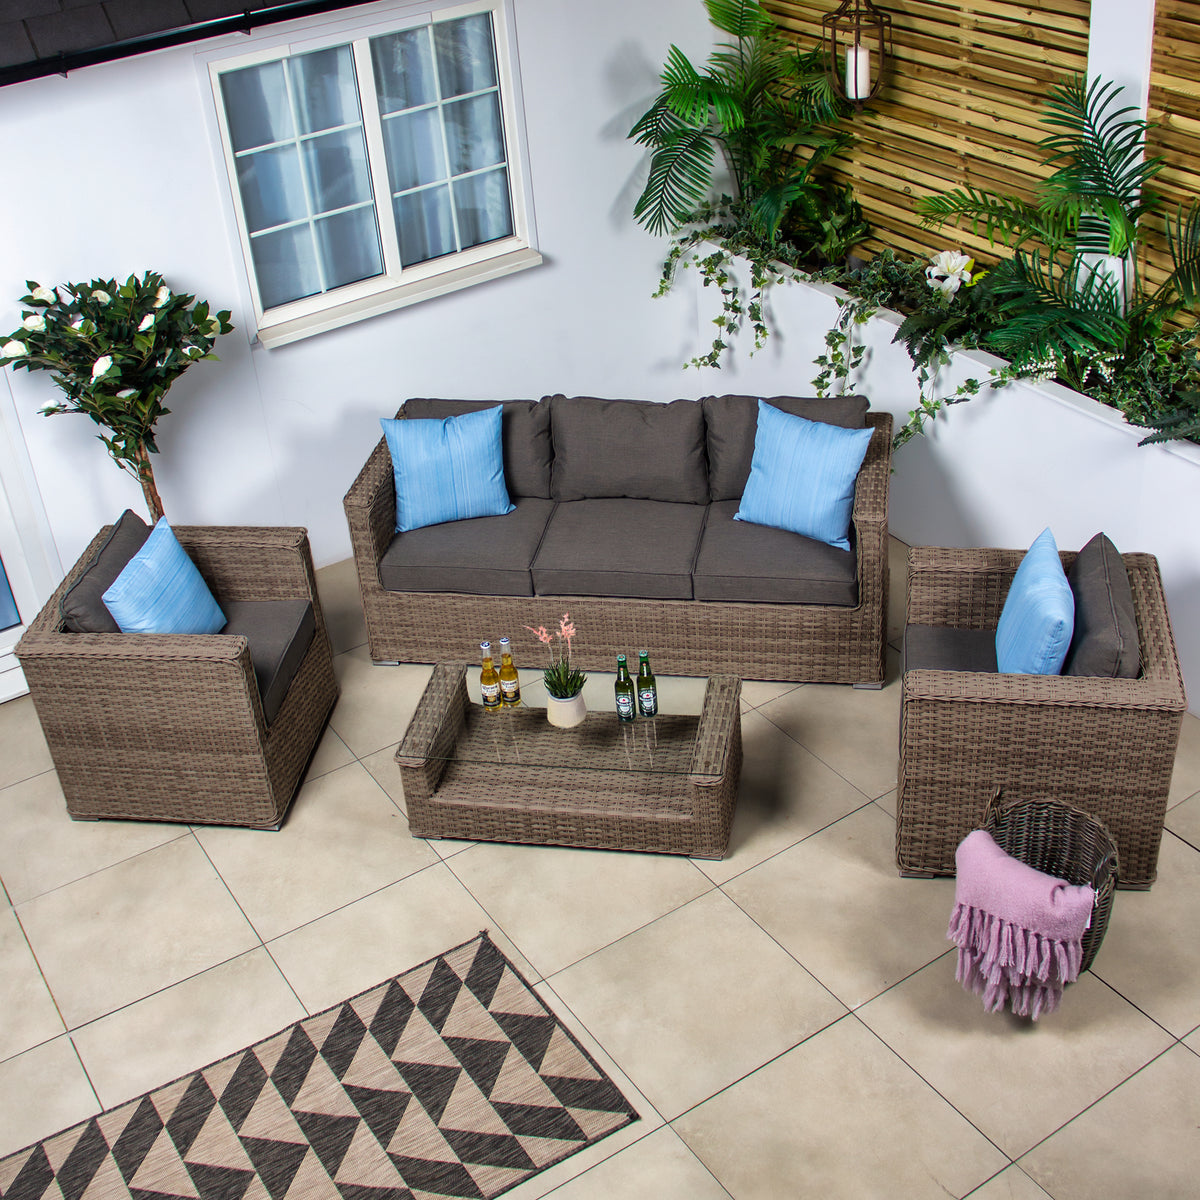 Bracken Outdoors Madrid Brown 3 Seat Sofa Lounge Garden Furniture Set with Coffee Table